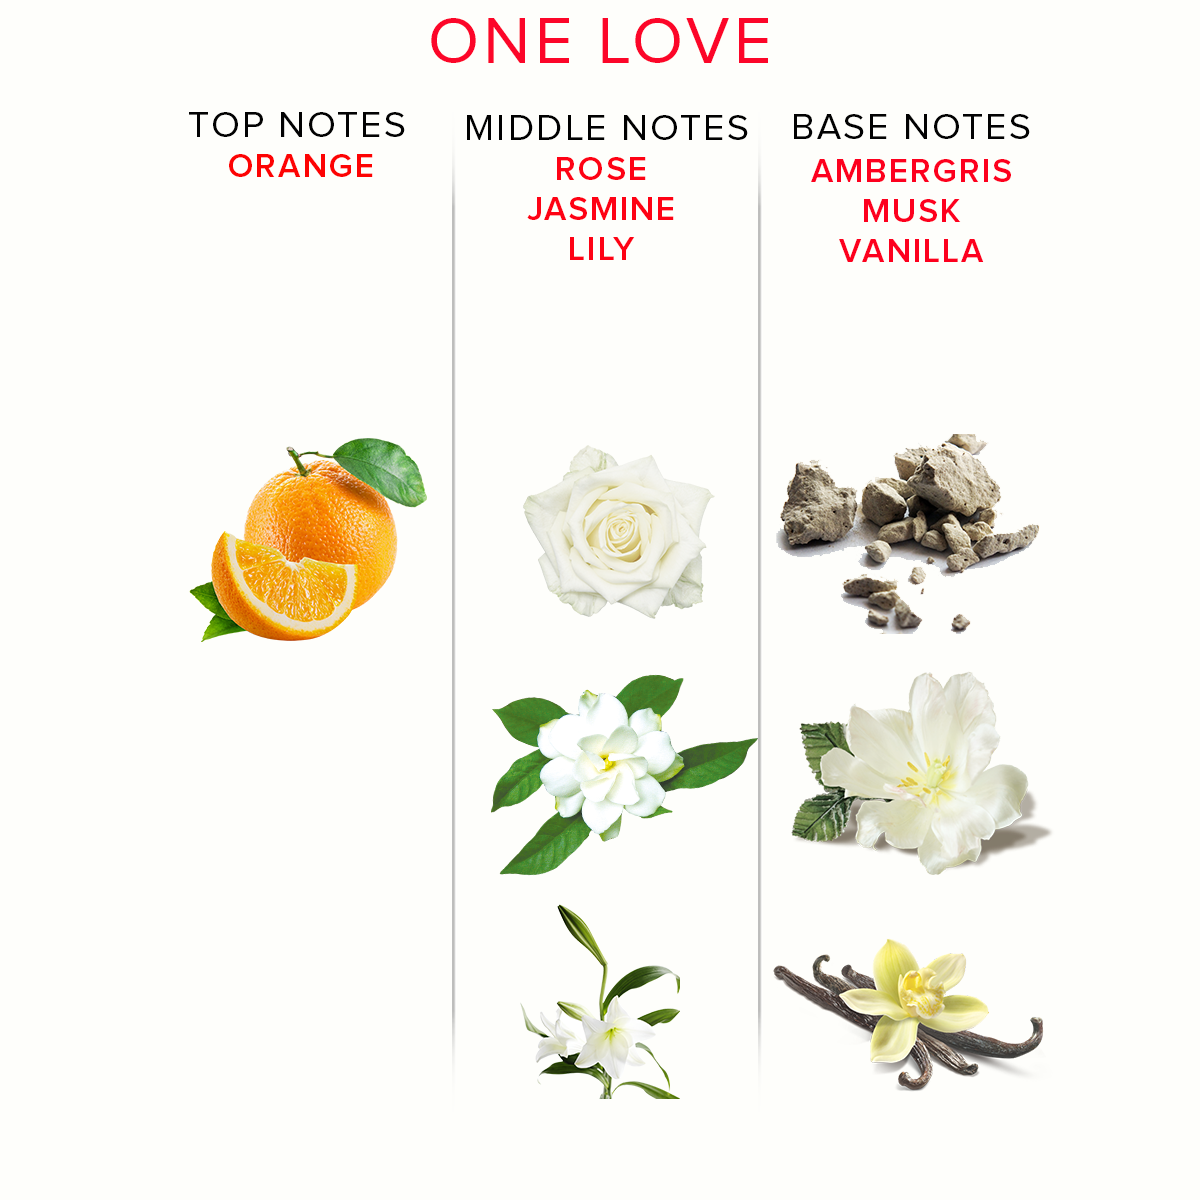 One Love Pheromone Parfum